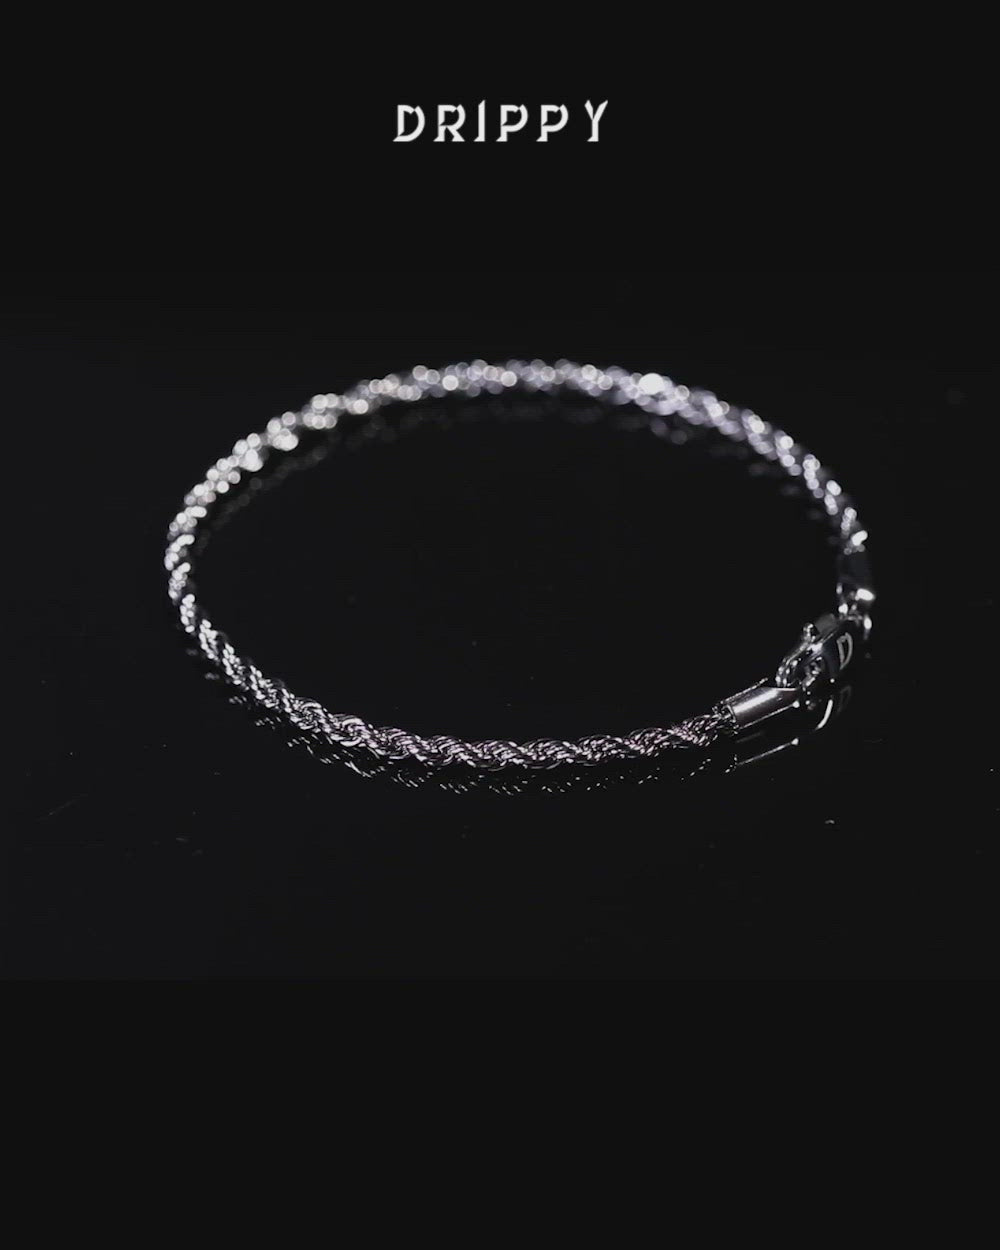 Men's 14K White Gold Solid Diamond Cut Rope Bracelet RPDS/14WHBM - ItsHot